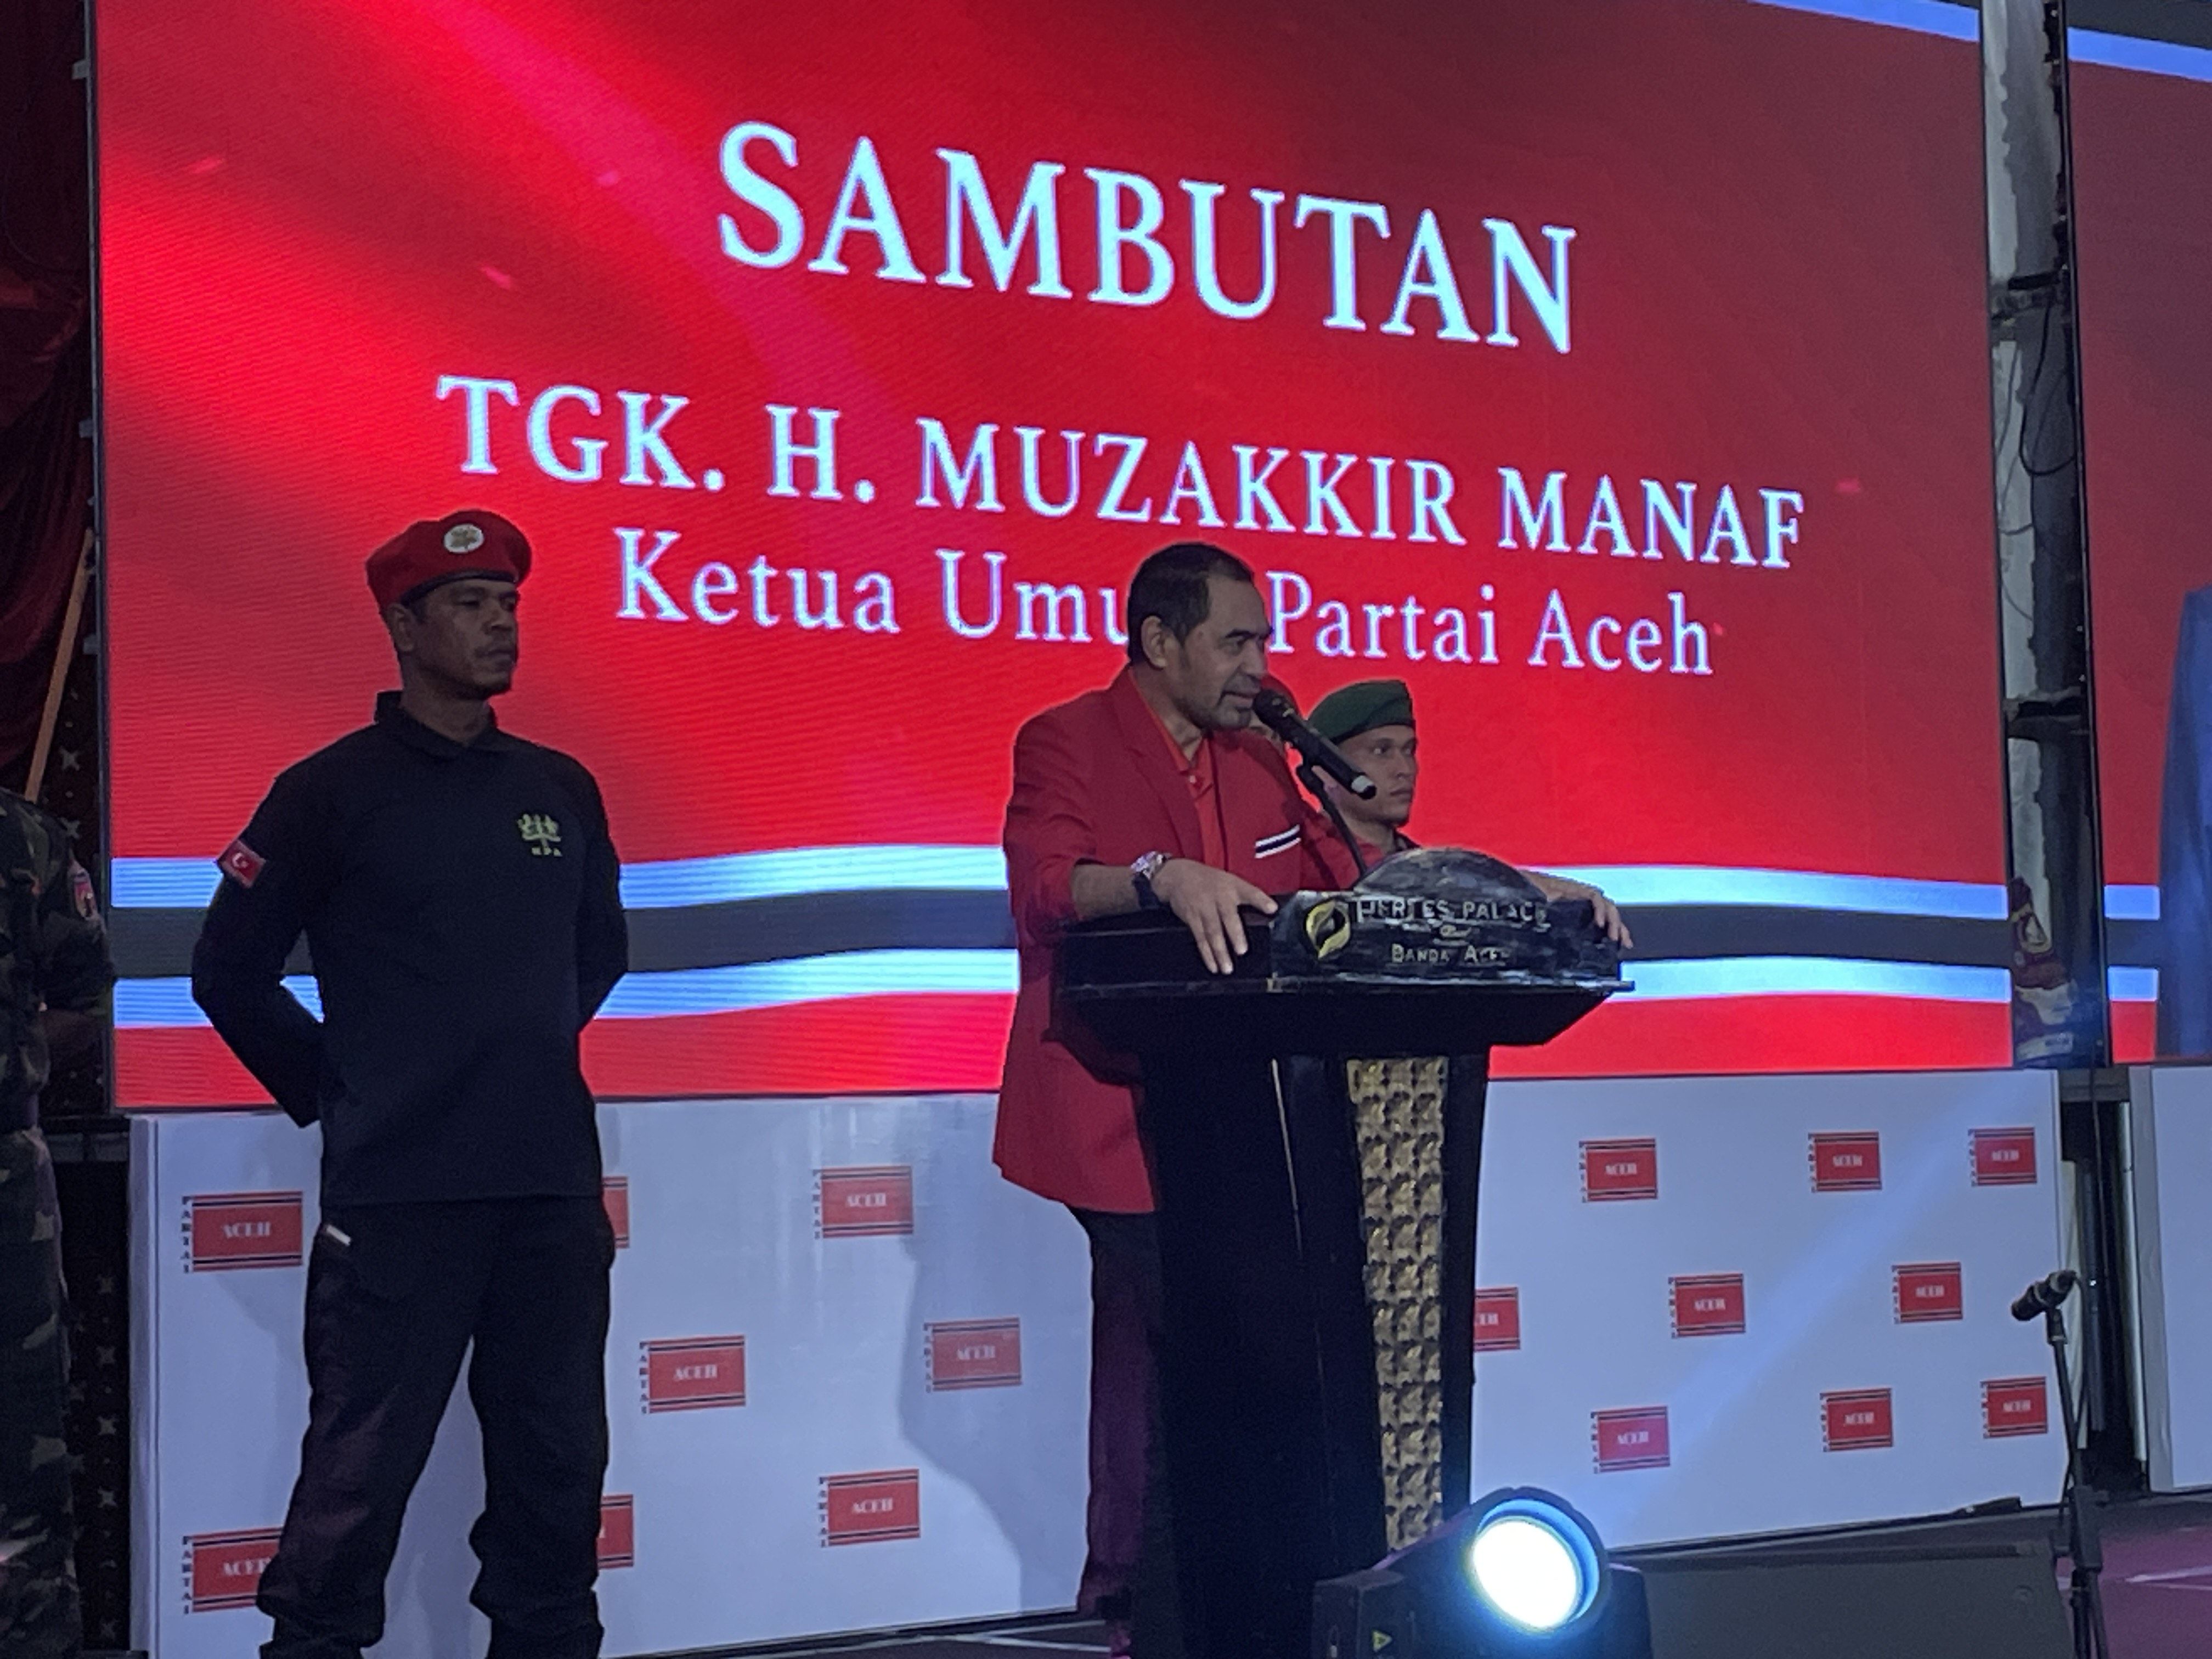 Muzakir Manaf - Ketua Umum Partai Aceh